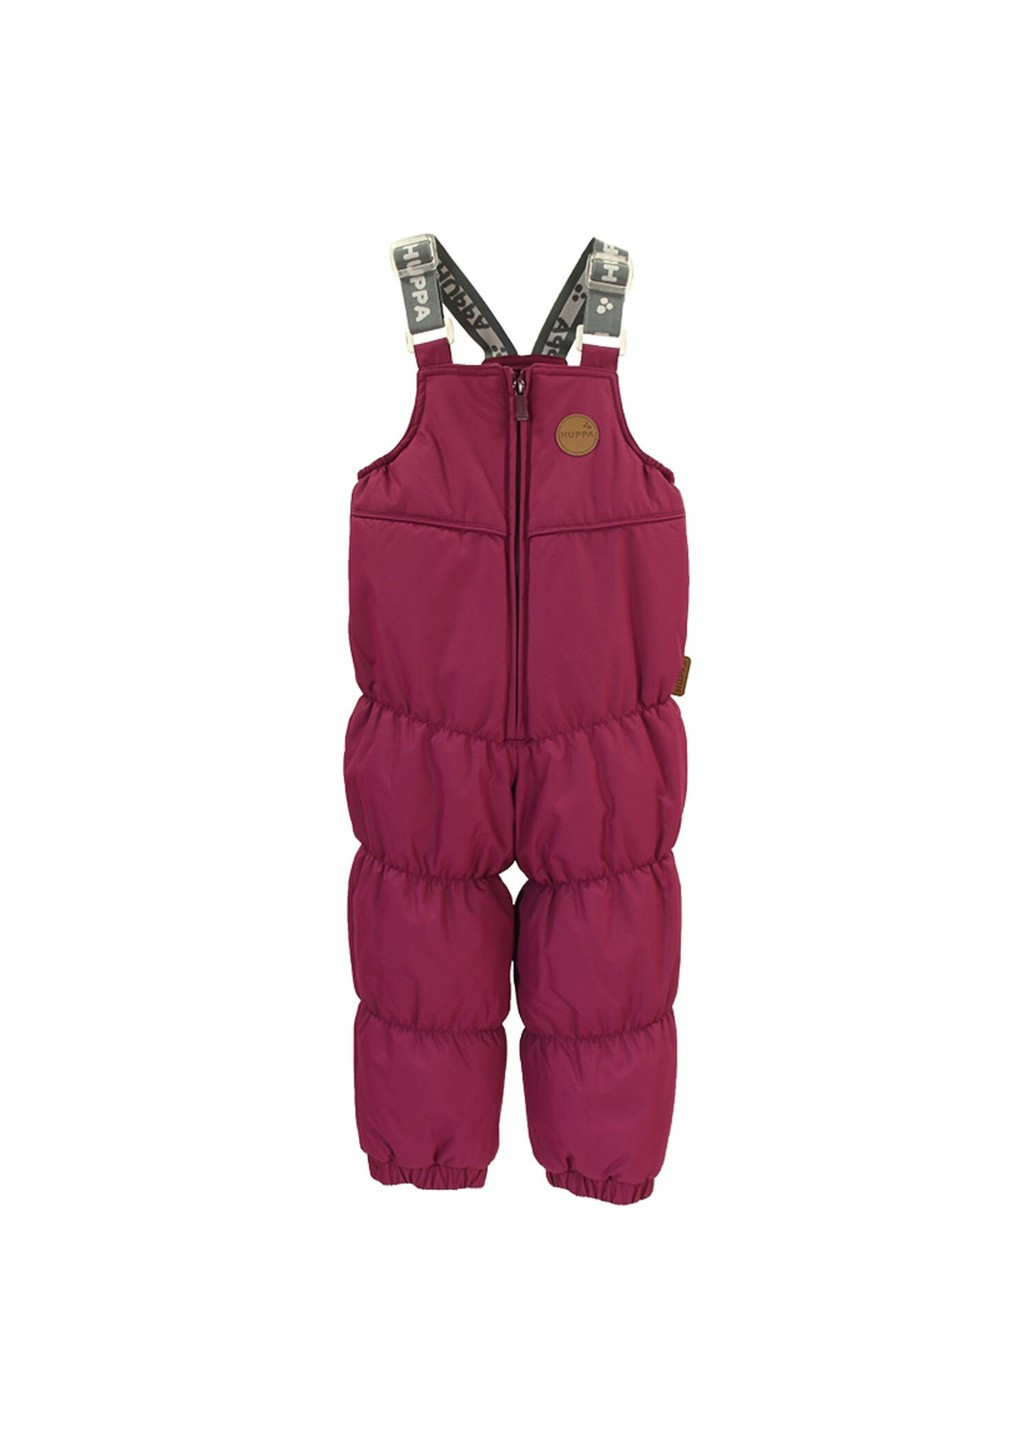 Бордовый зимний комплект зимний (куртка + полукомбинезон) novalla Huppa